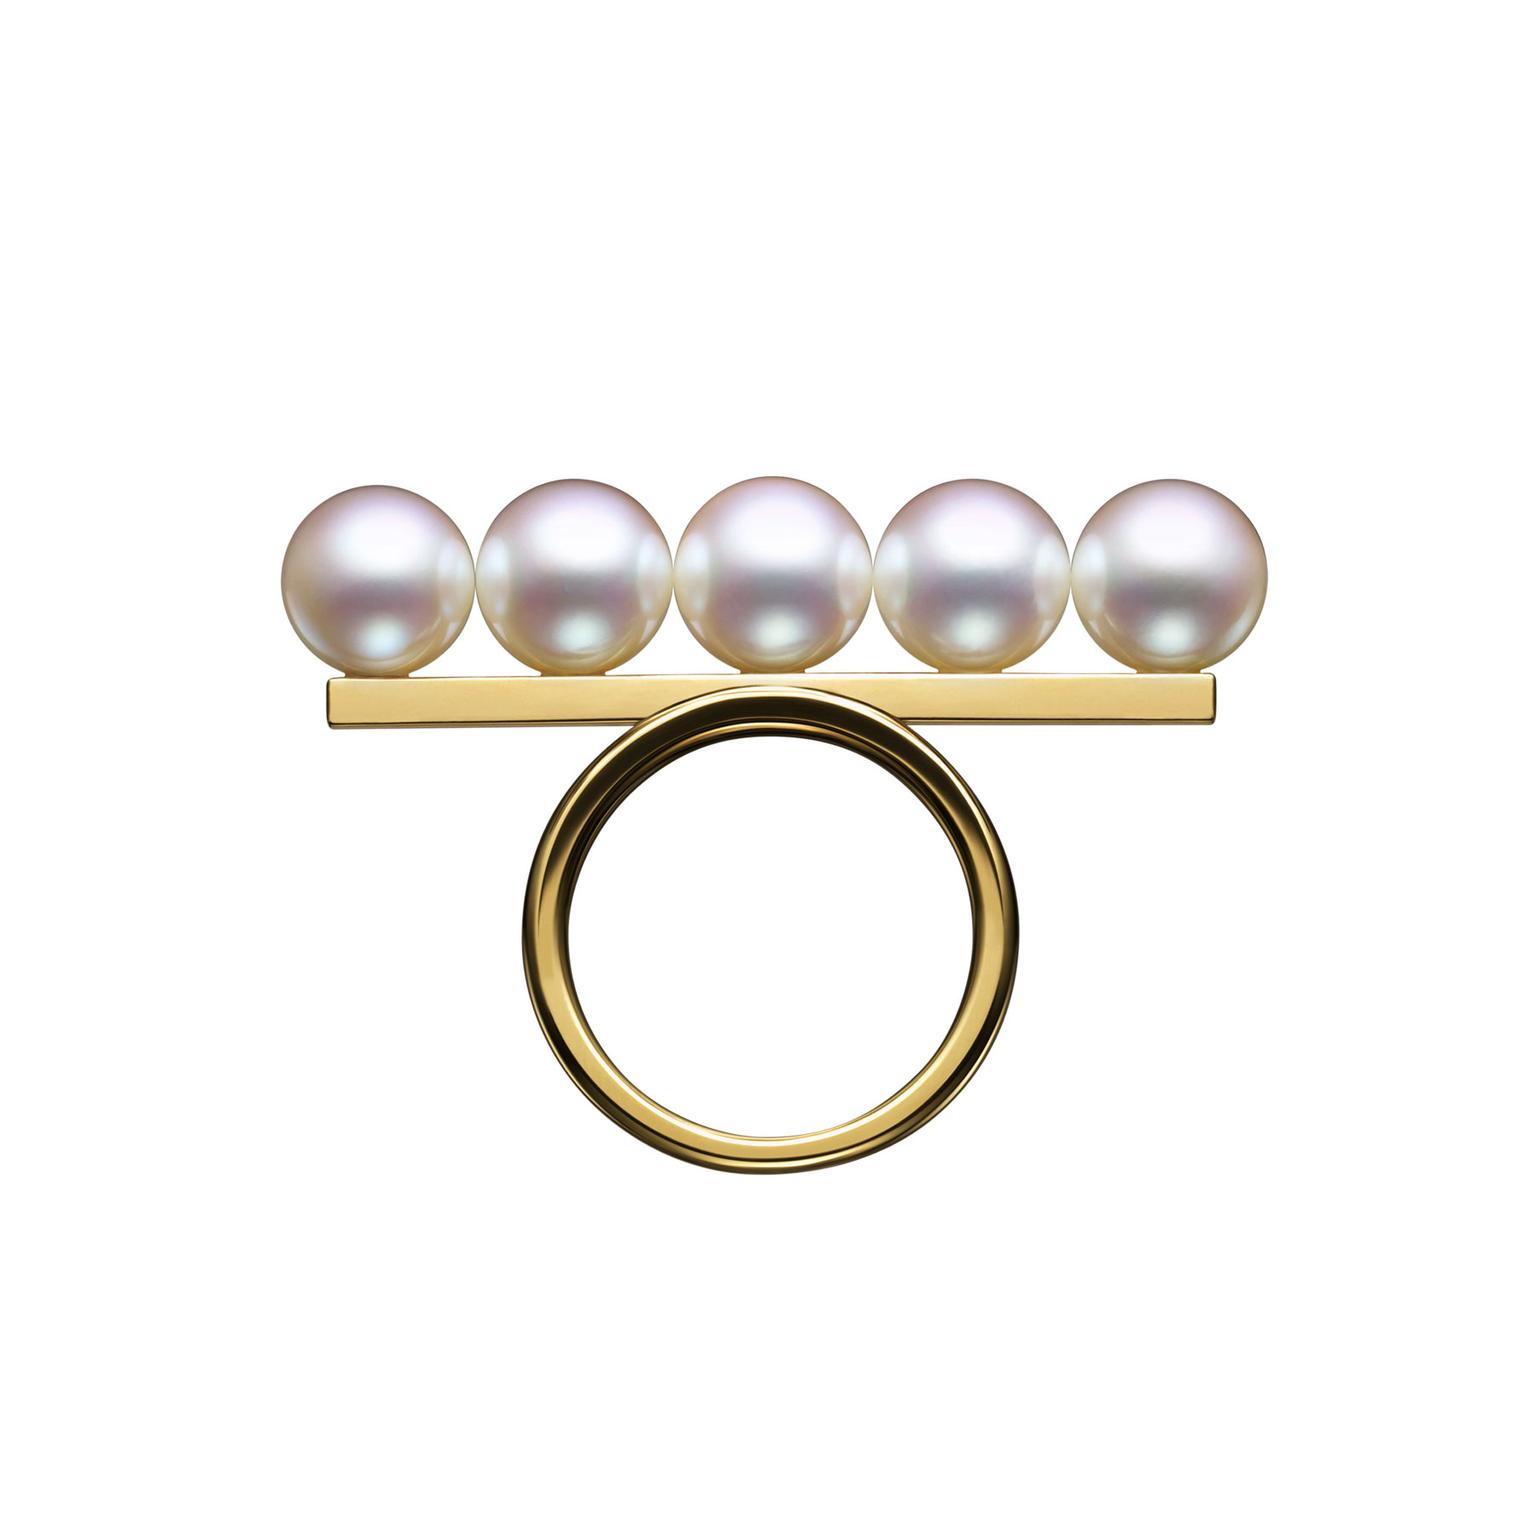 Tasaki Balance ring with Akoya pearls